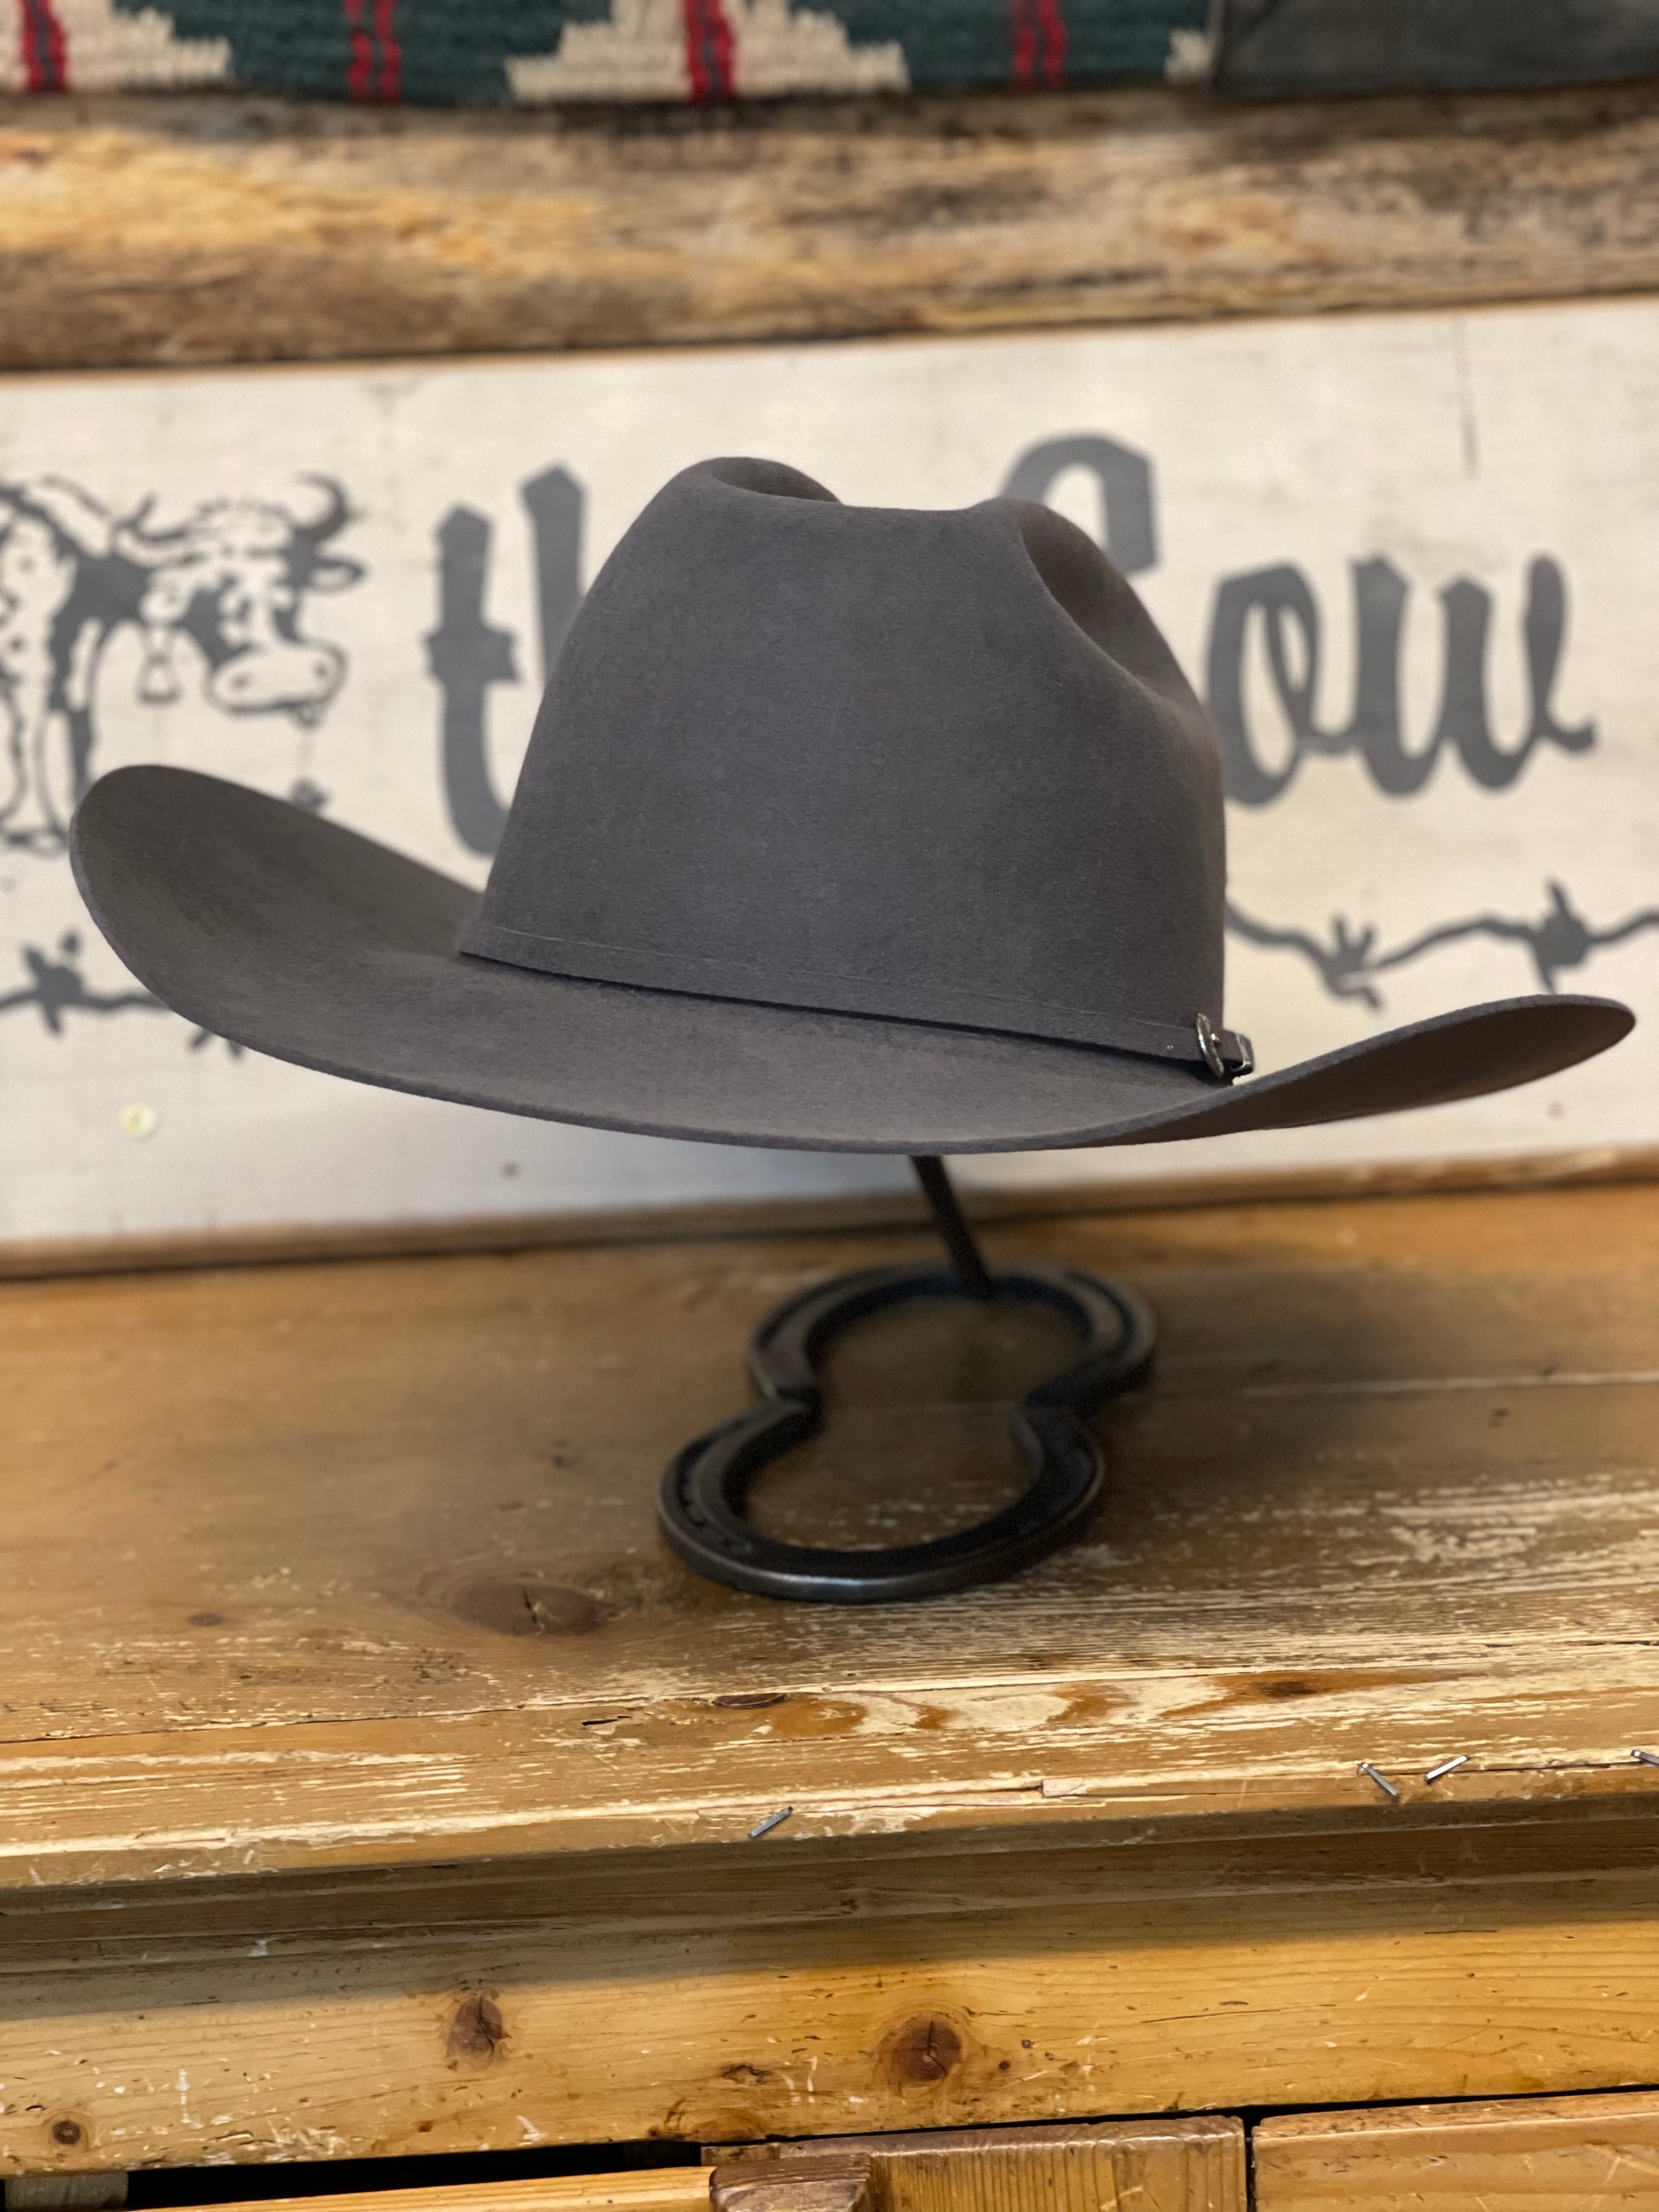 American Hat Makers Colt Tooled Cowboy Hat Band